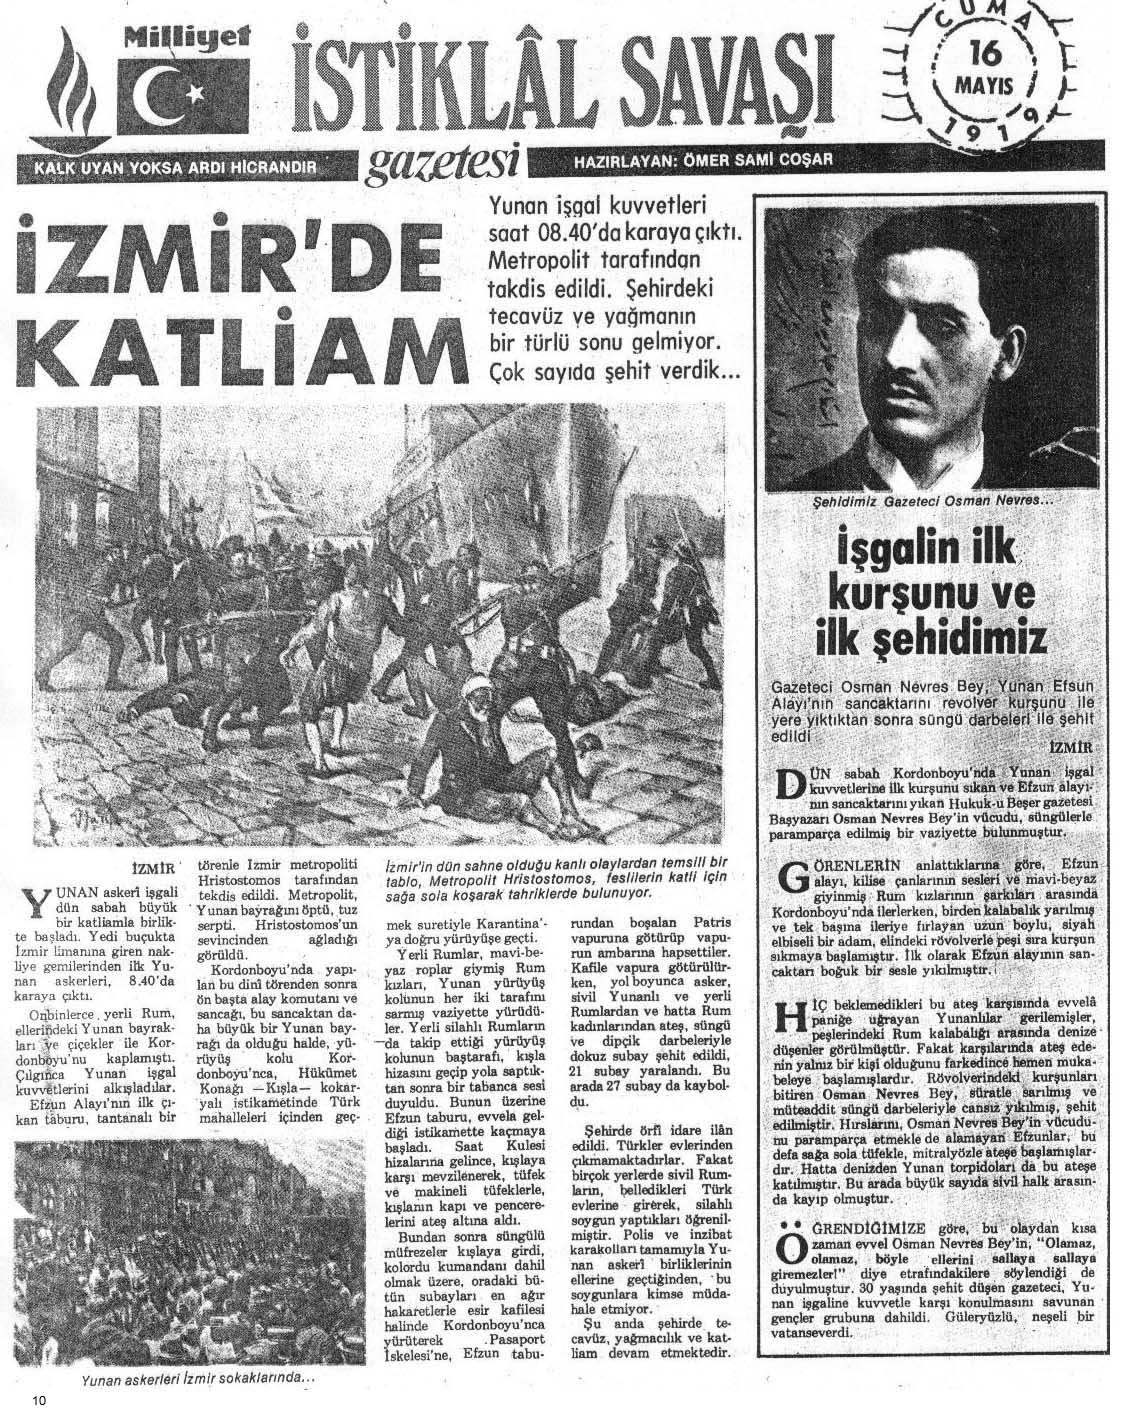 İzmir Yunan İşgali Gazete Manşetleri